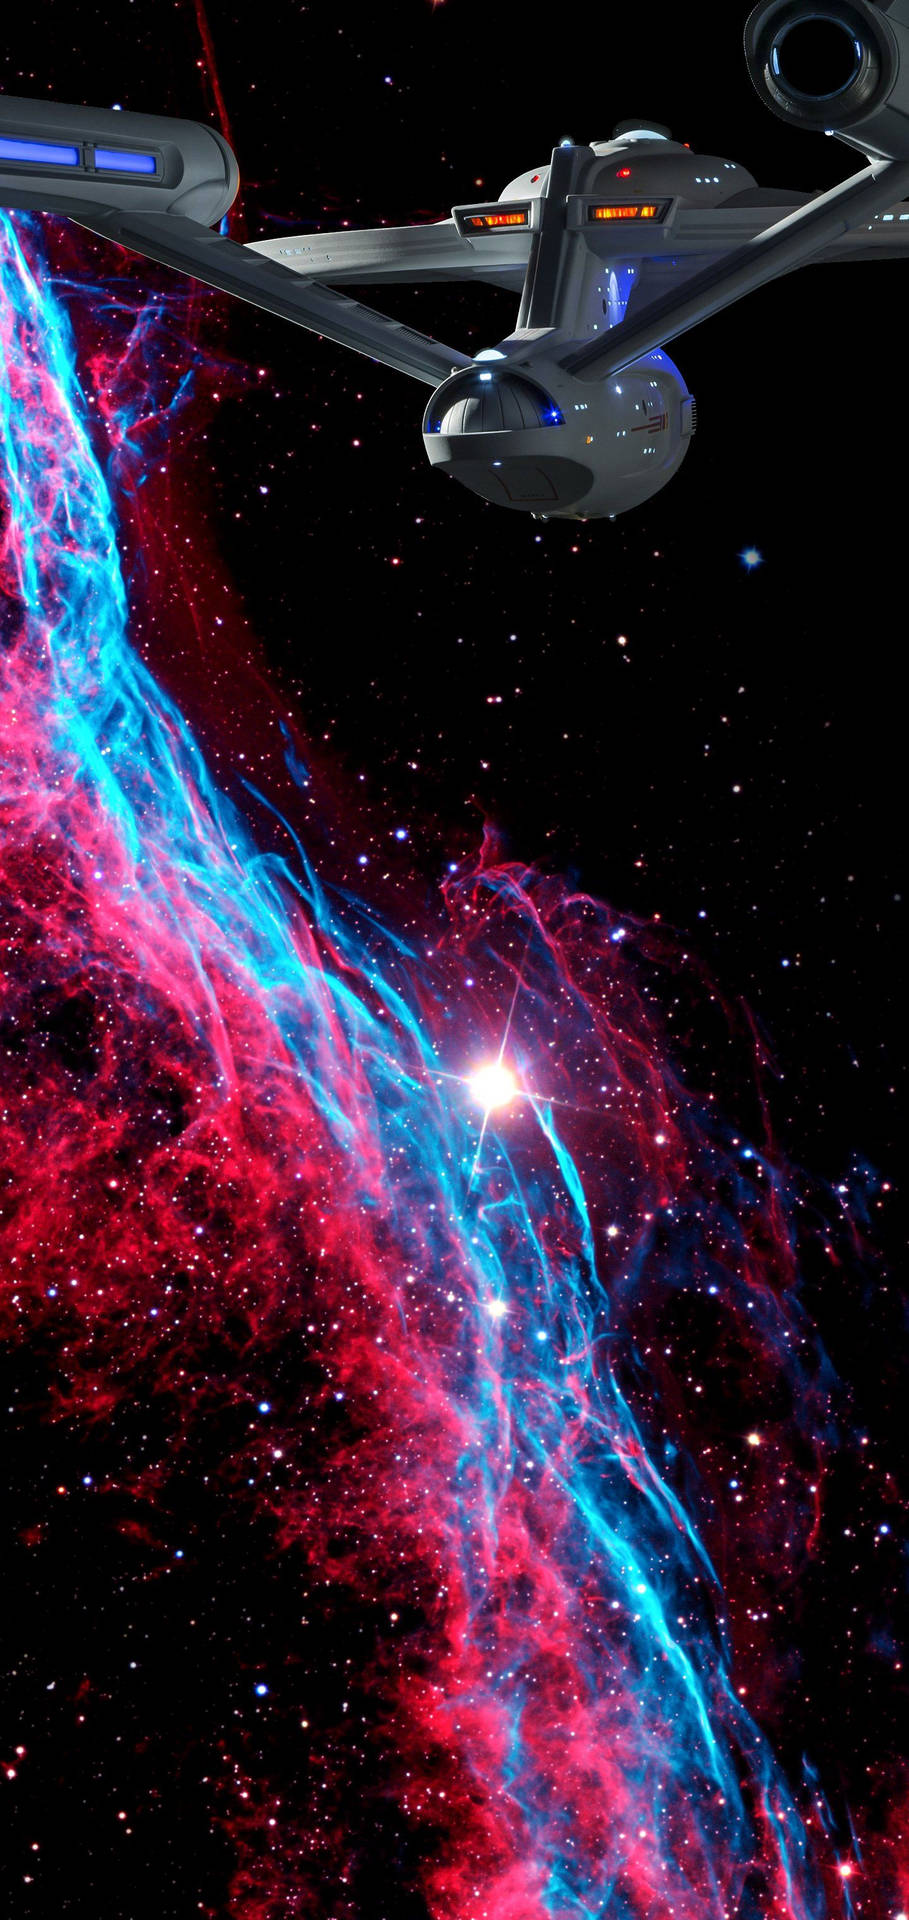 Galaxy S10 Weird Spaceship And Nebula Background